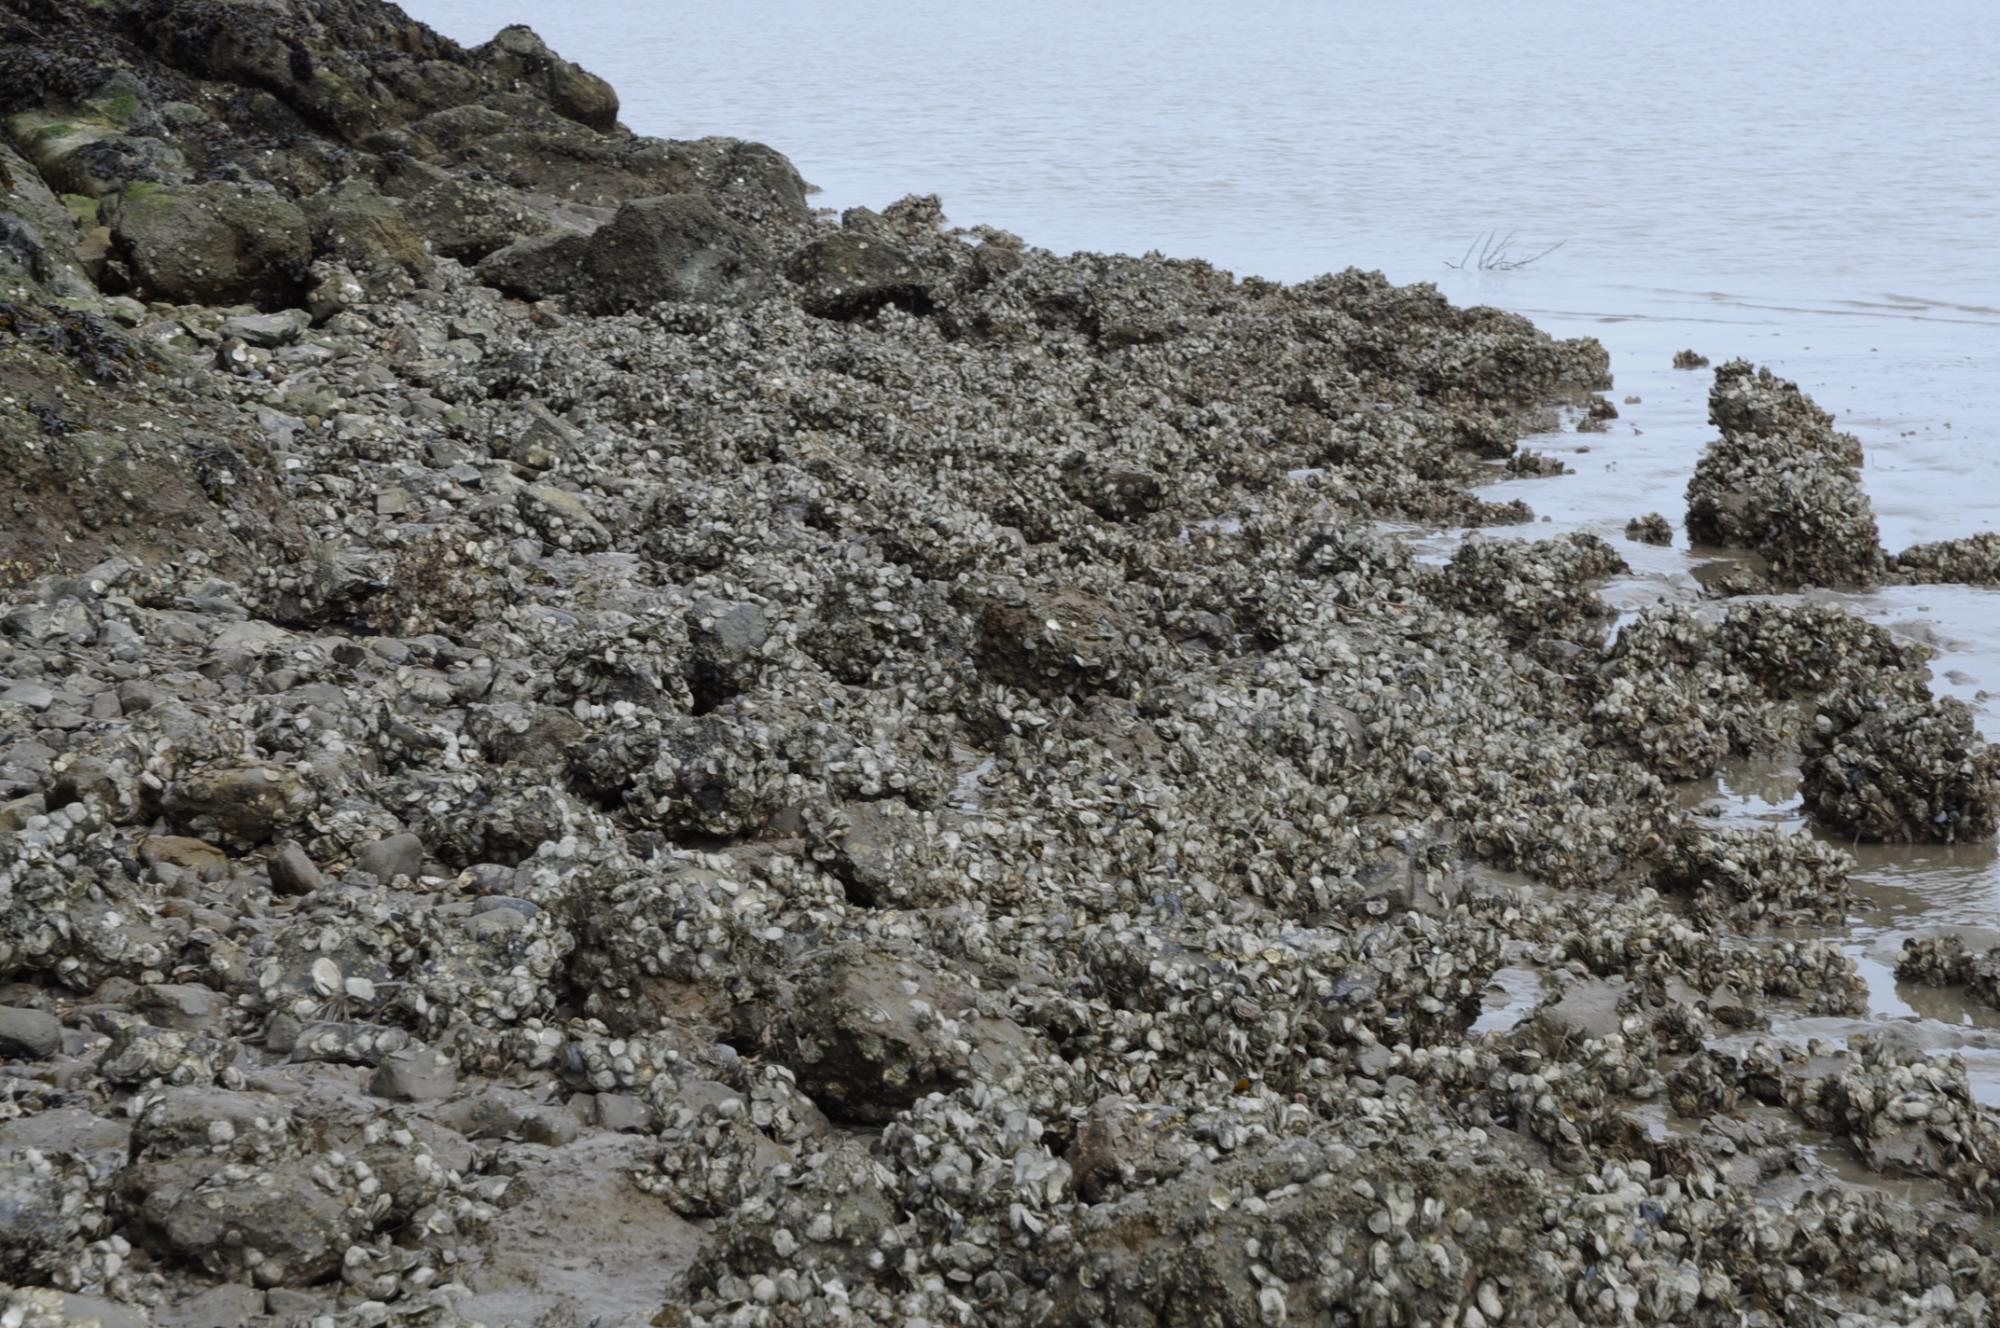 Oysters on China Camp shoreline, San Francisco Bay